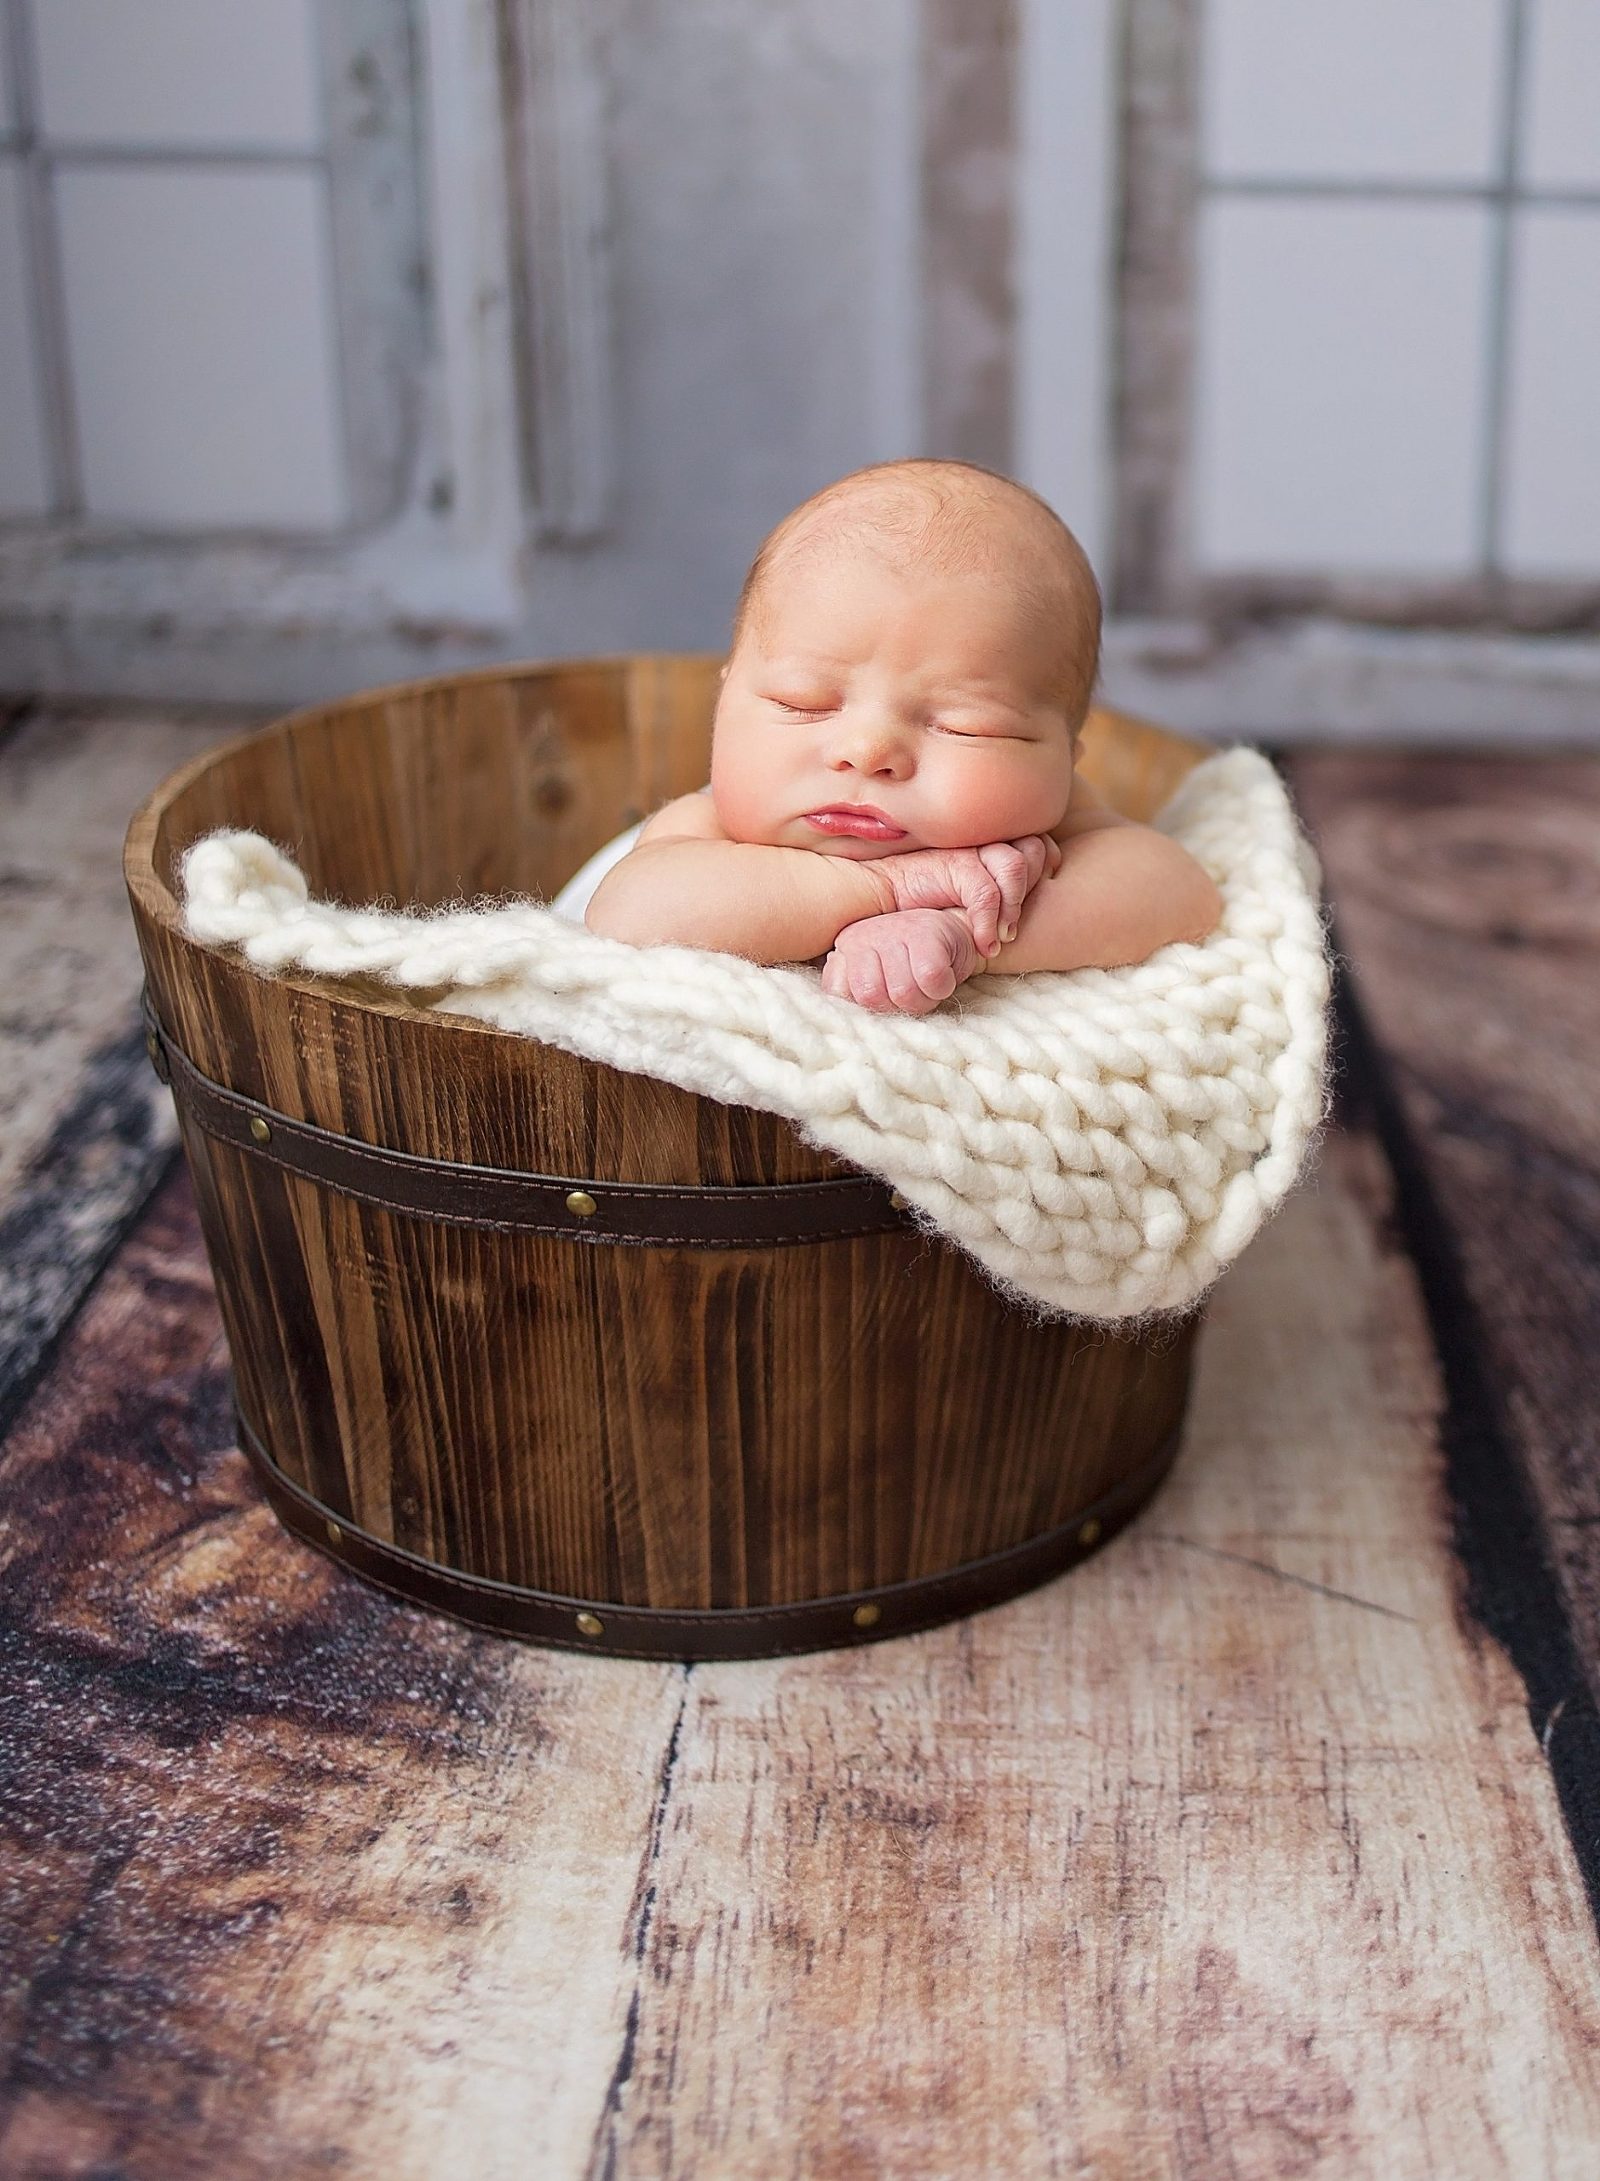 Newborn baby boy in a bucket with a cream blanket